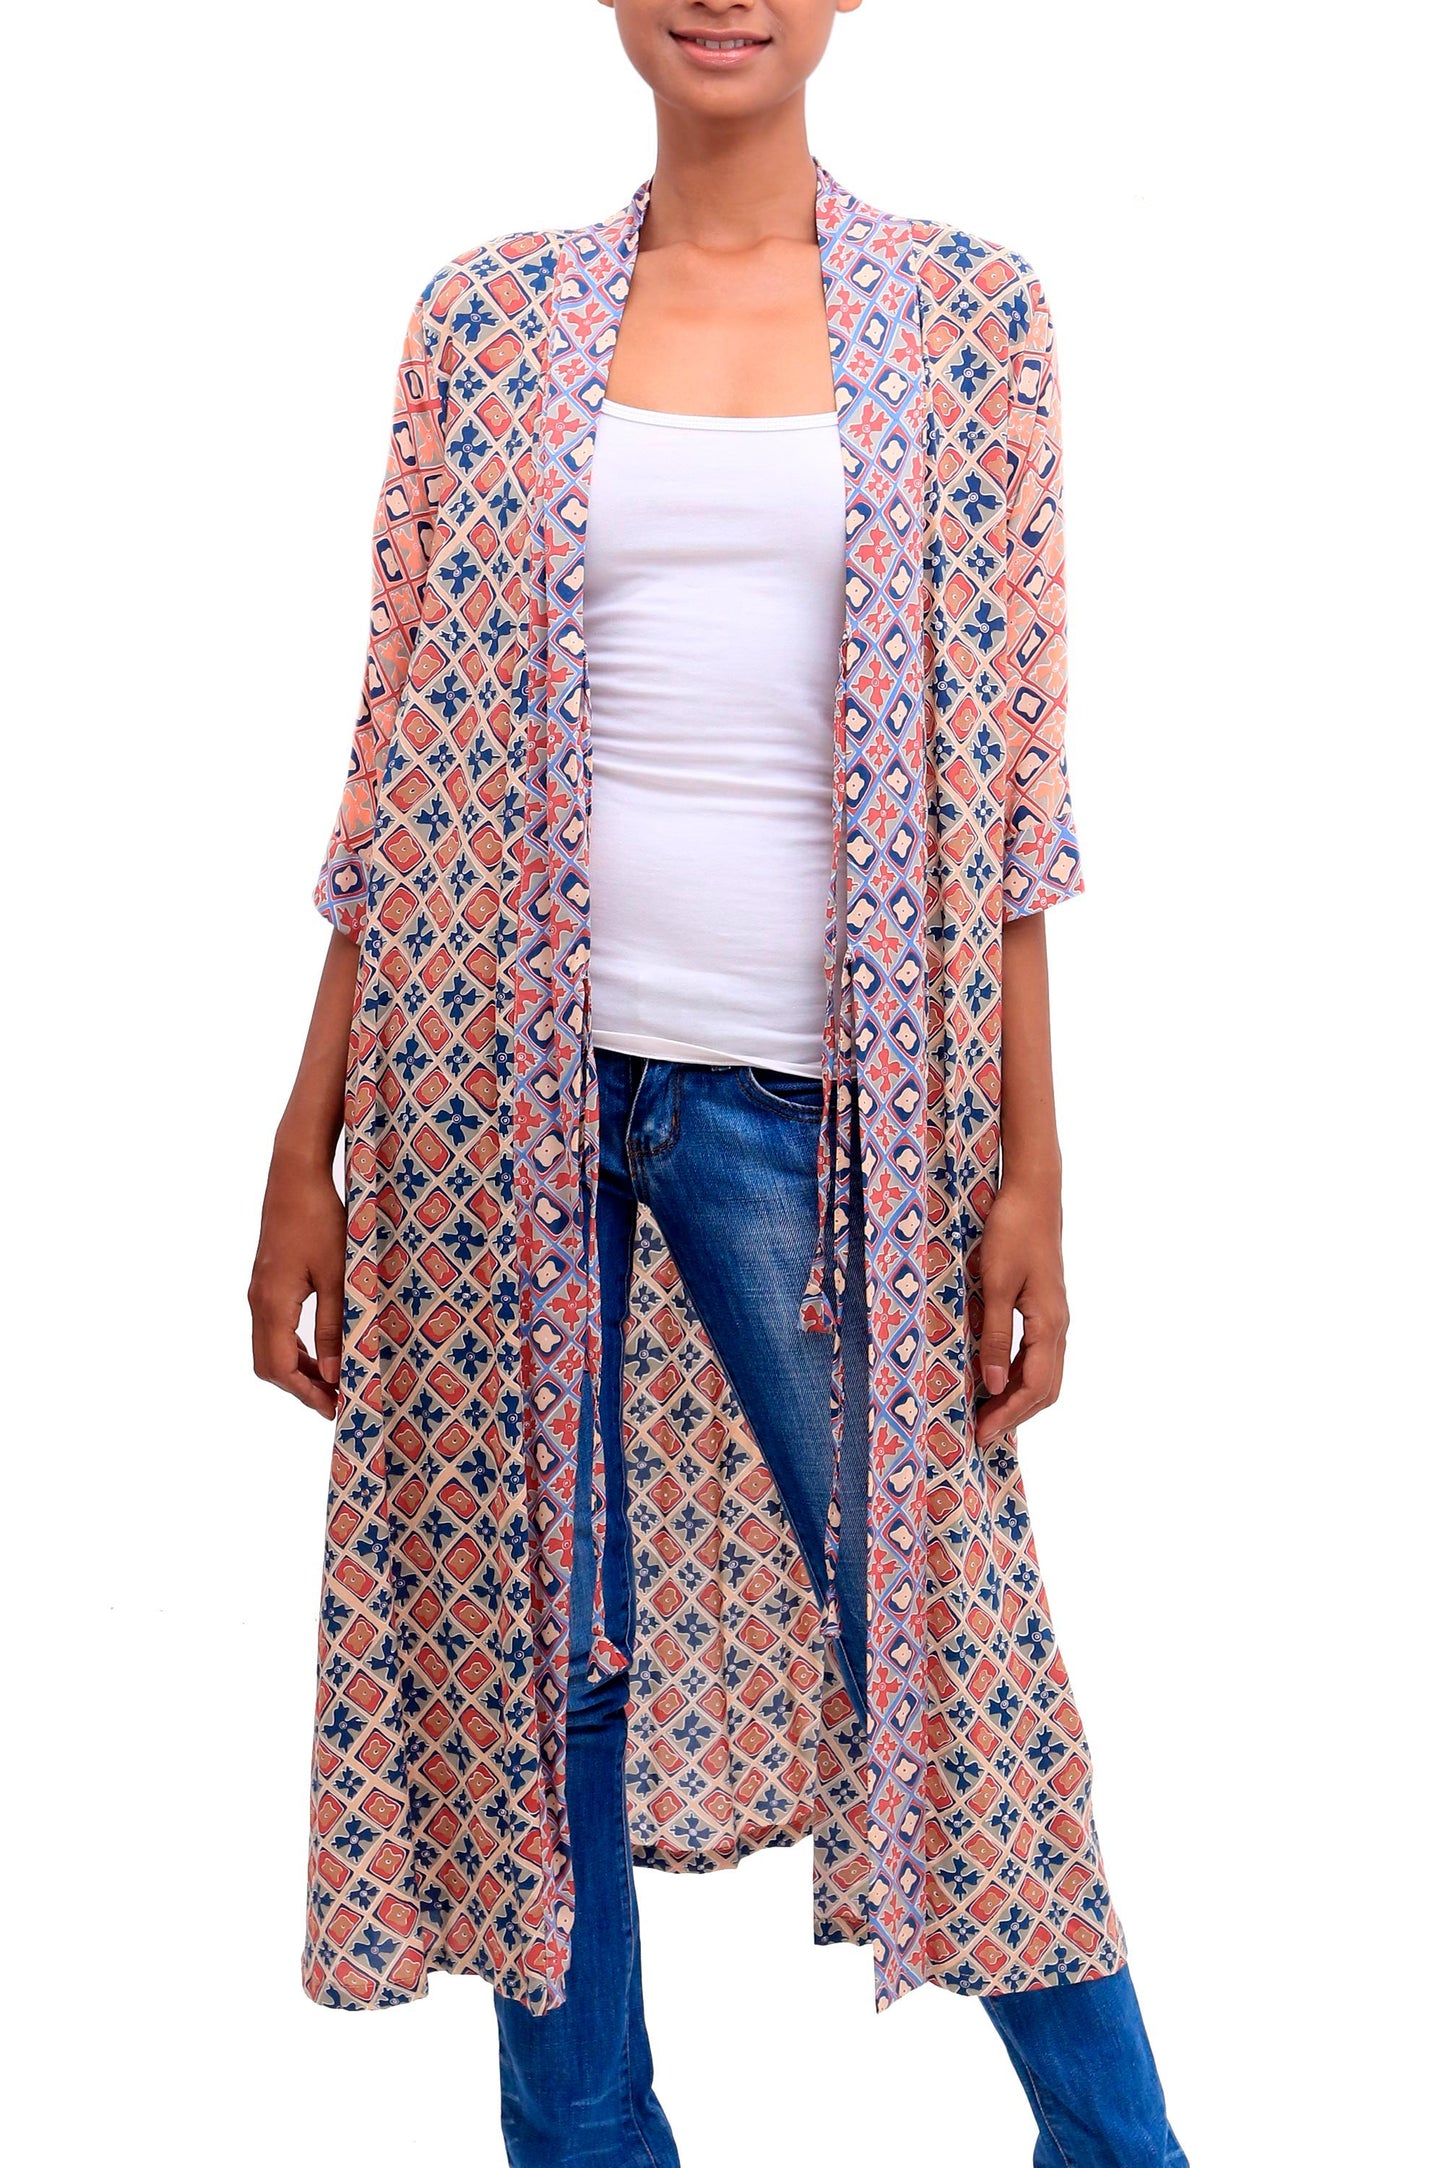 Kelud Crisscross Chili and Azure Printed Rayon Long Kimono from Bali